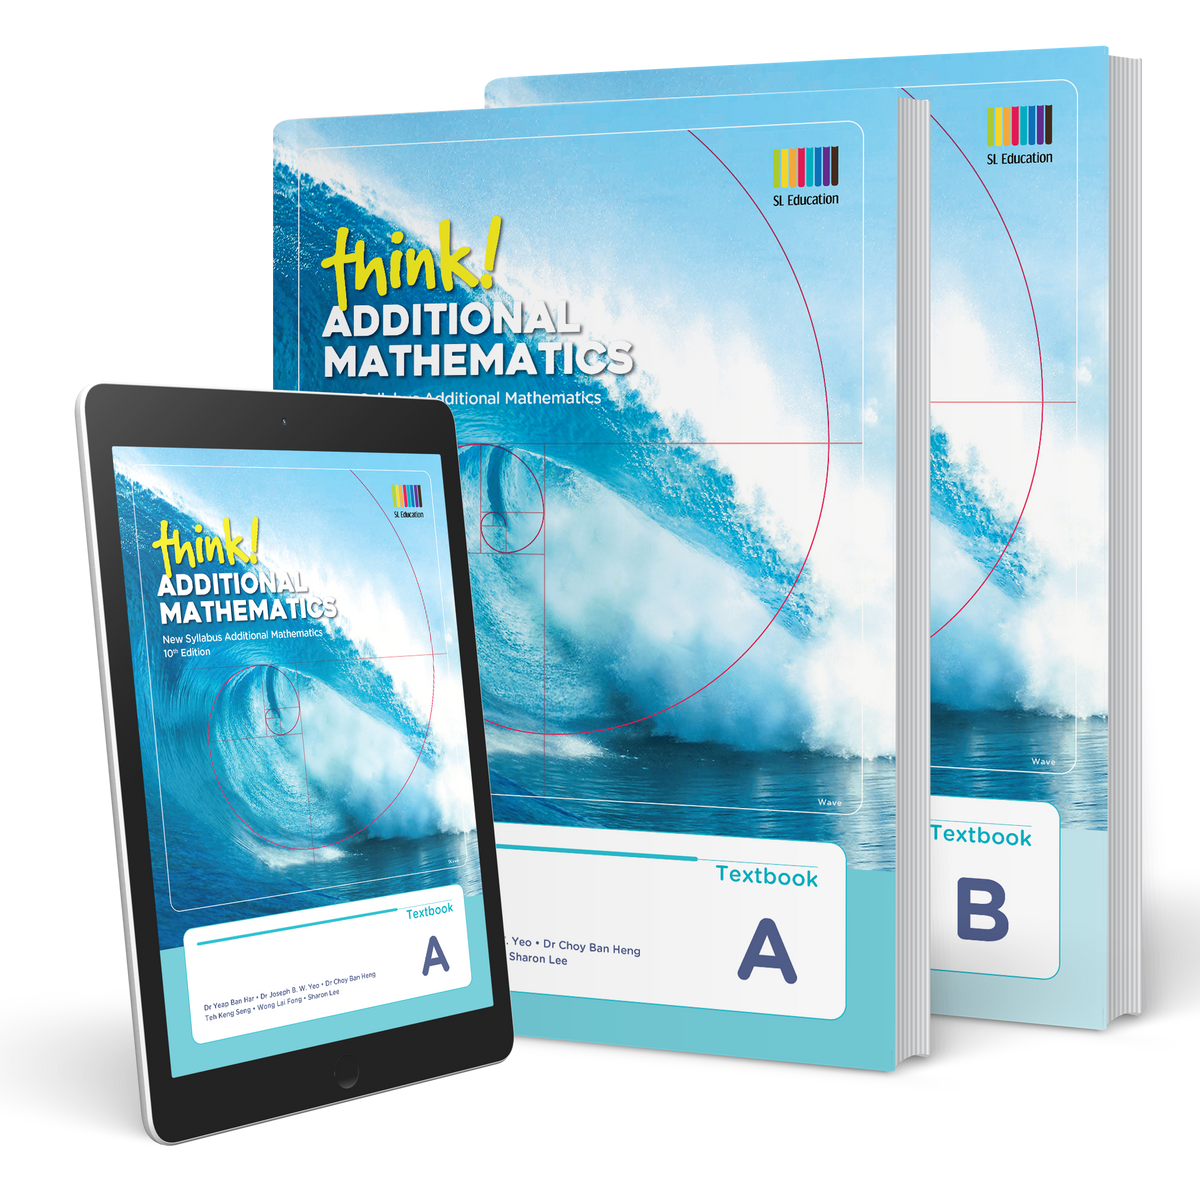 shinglee-additional-mathematics-workbook